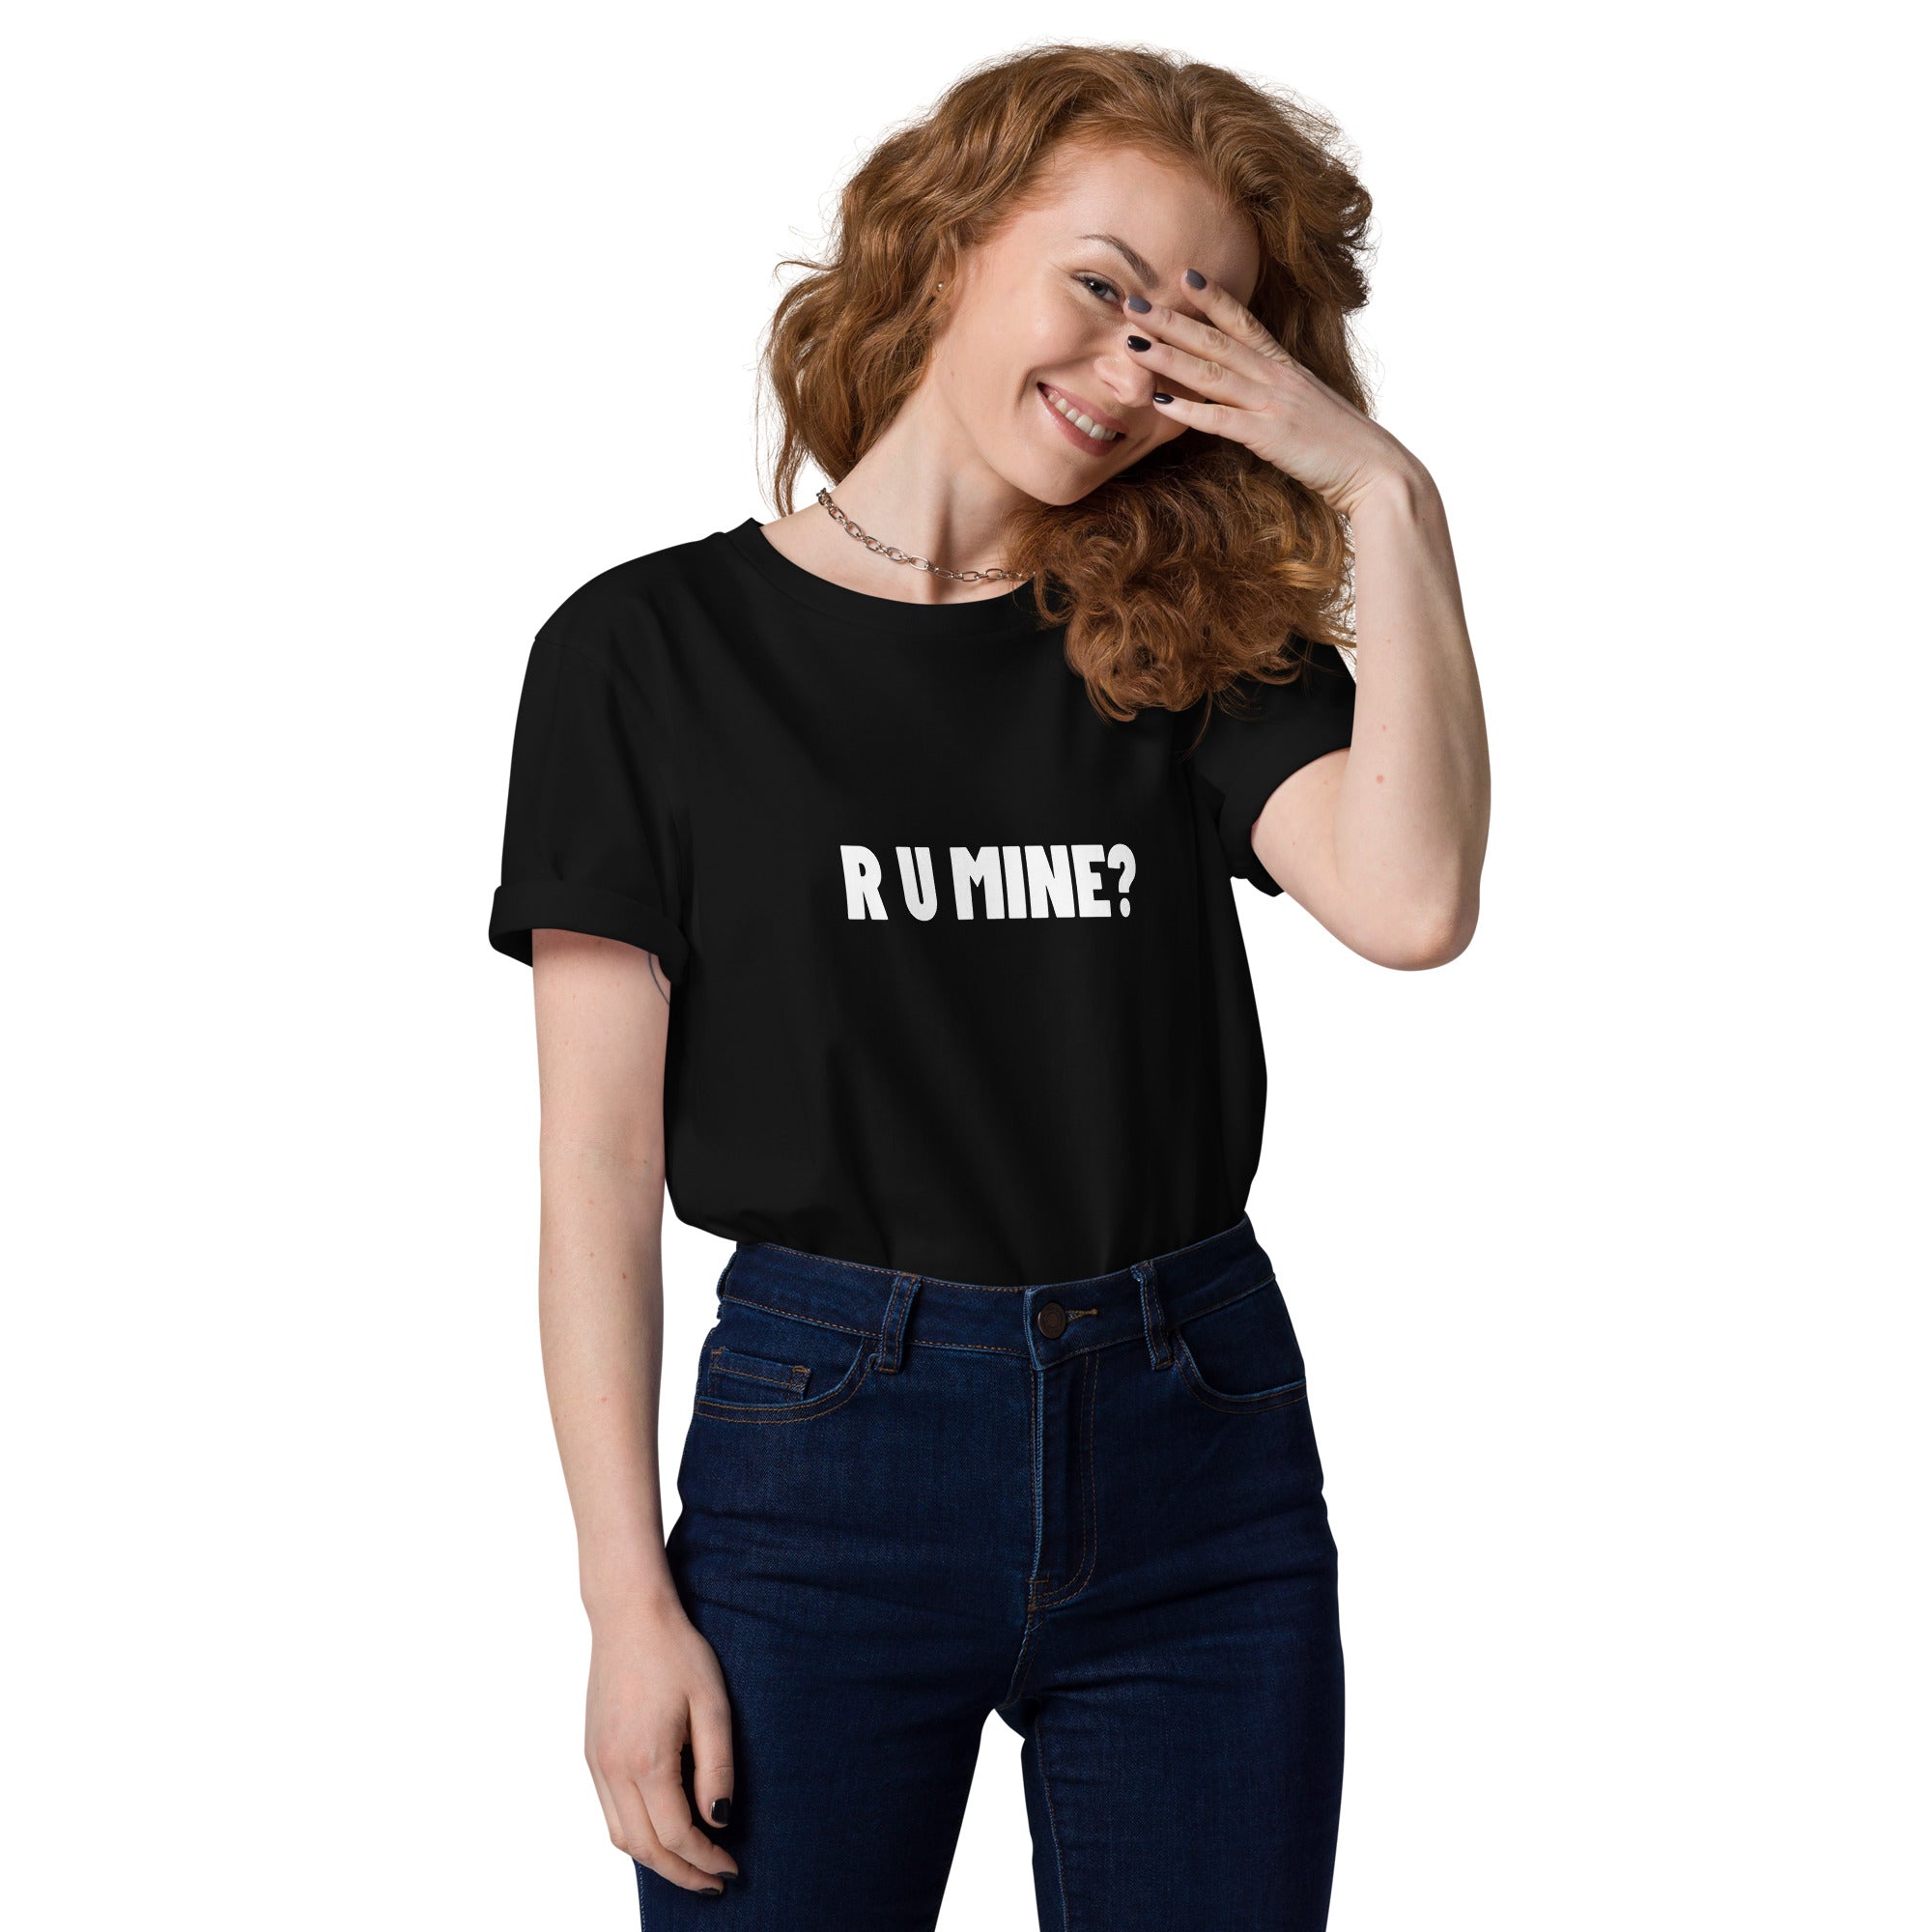 R U MINE? Printed Unisex Organic Cotton T-shirt